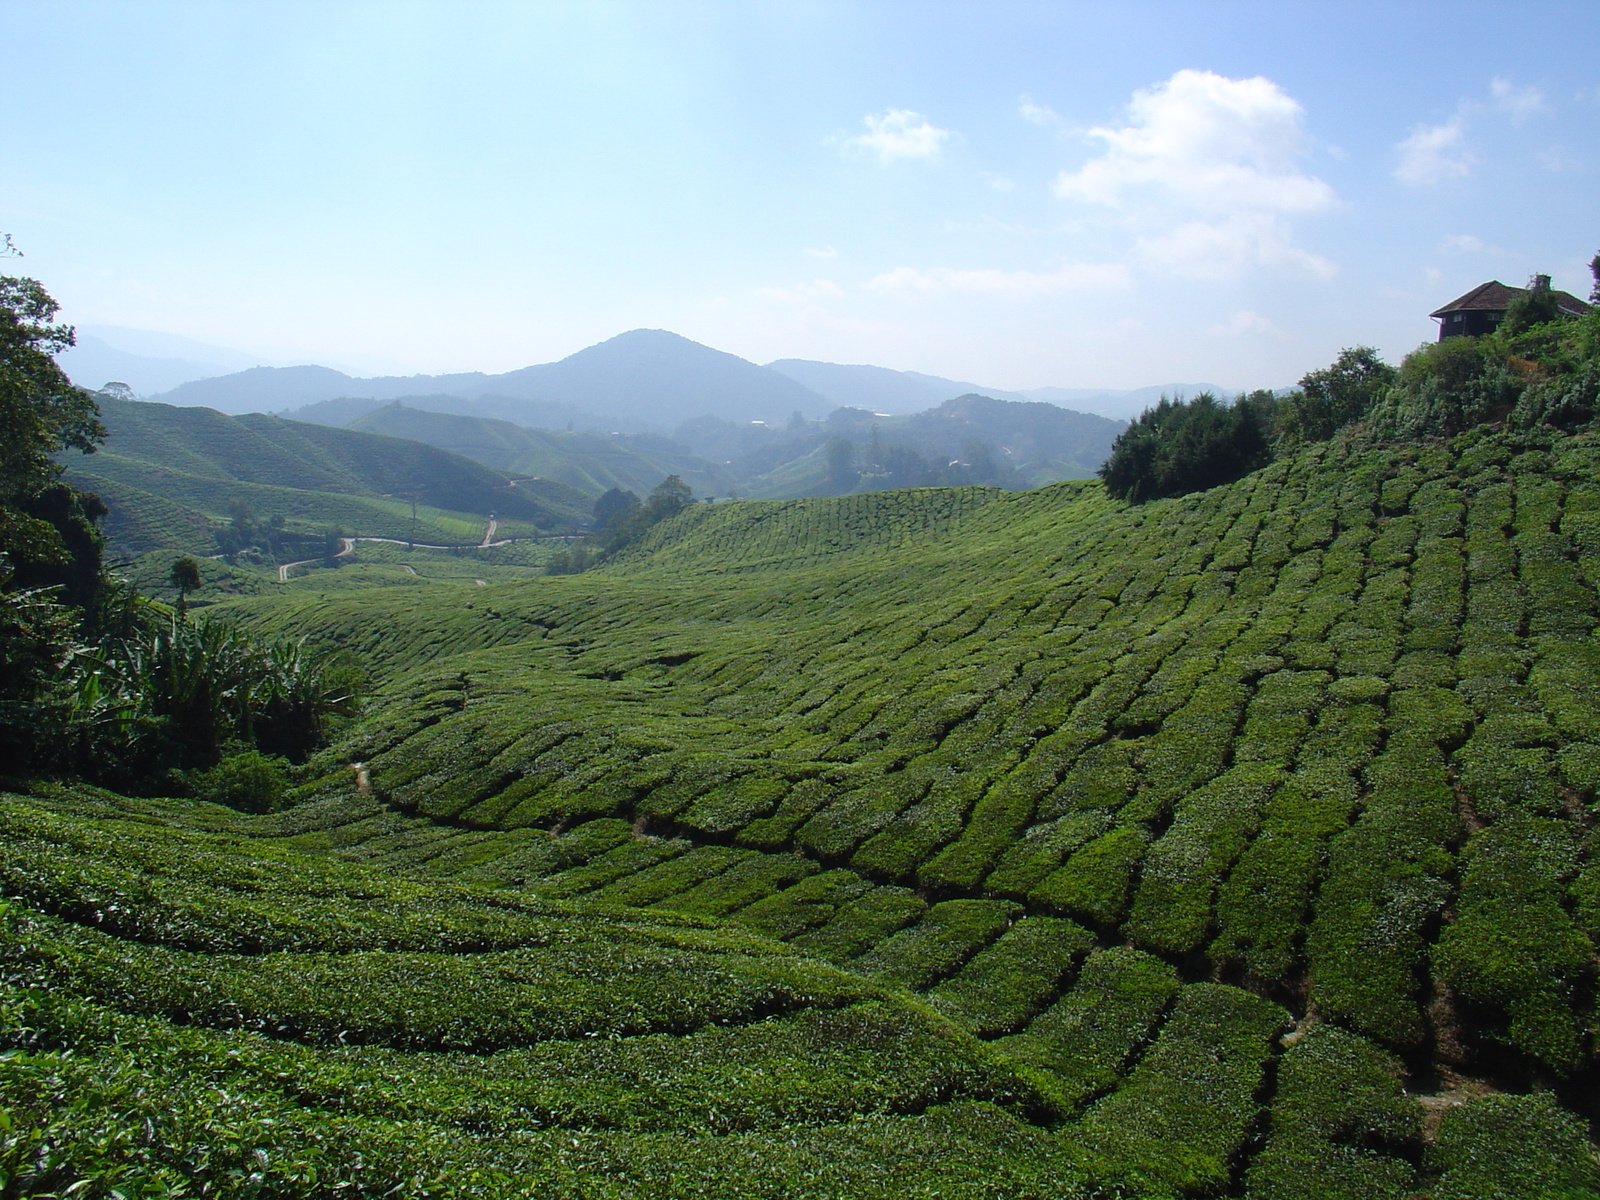 a beautiful landscape that looks like tea bushes